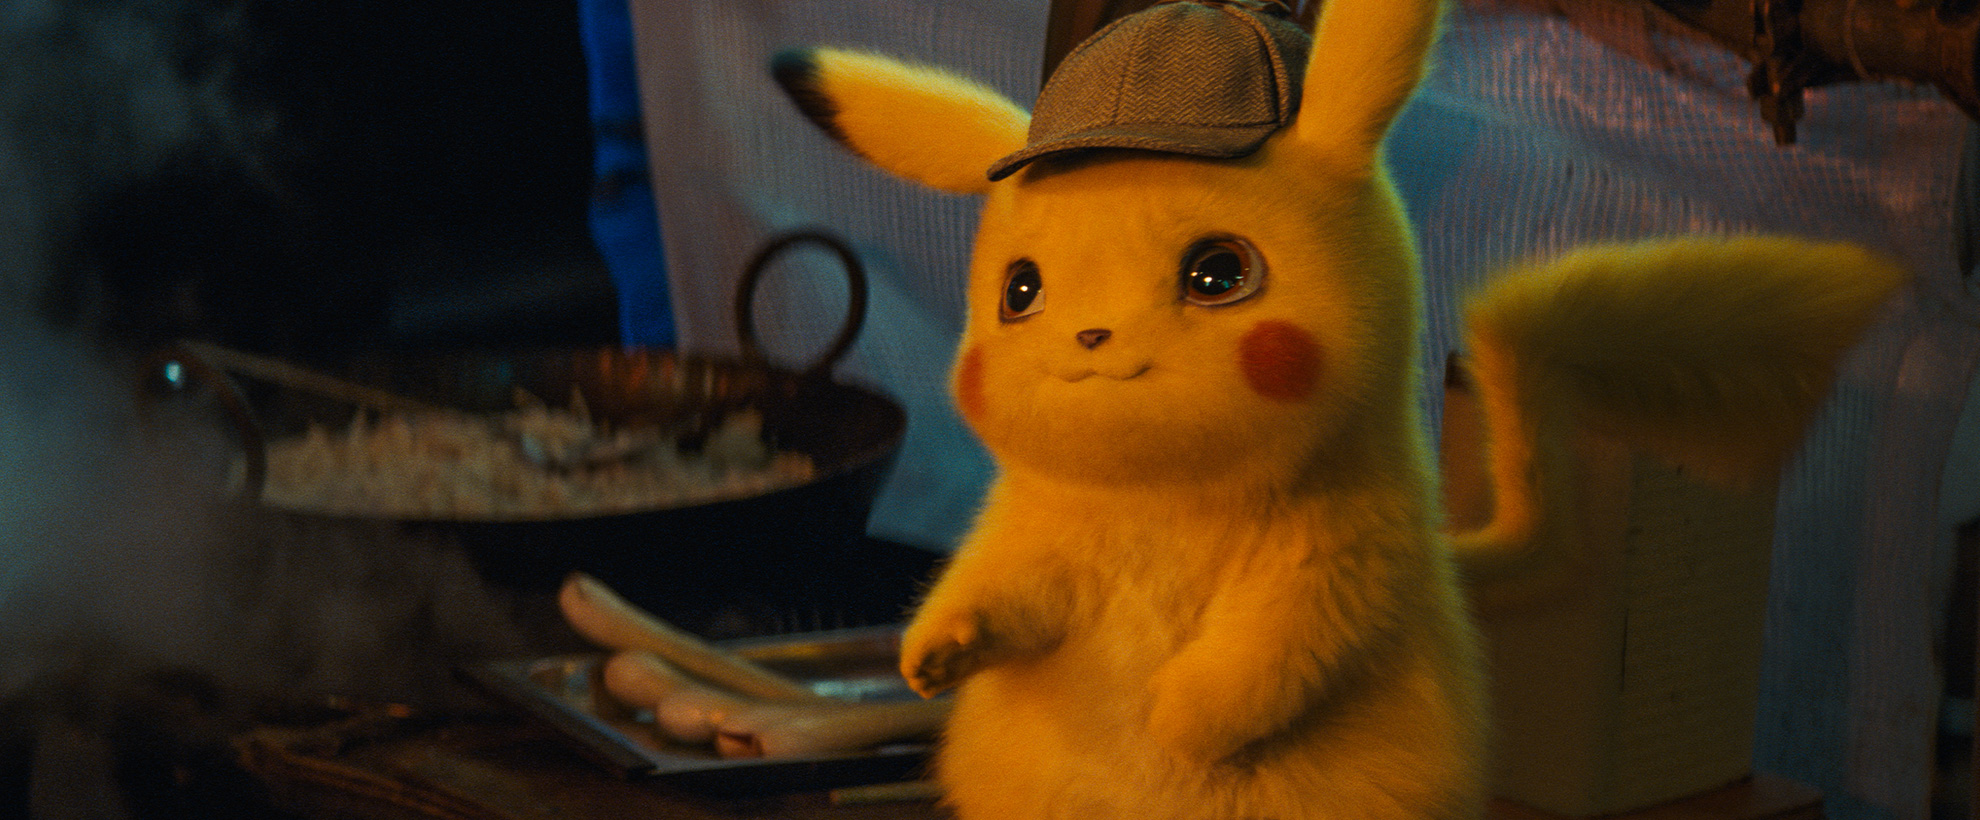 Pikachu in a deerstalker hat